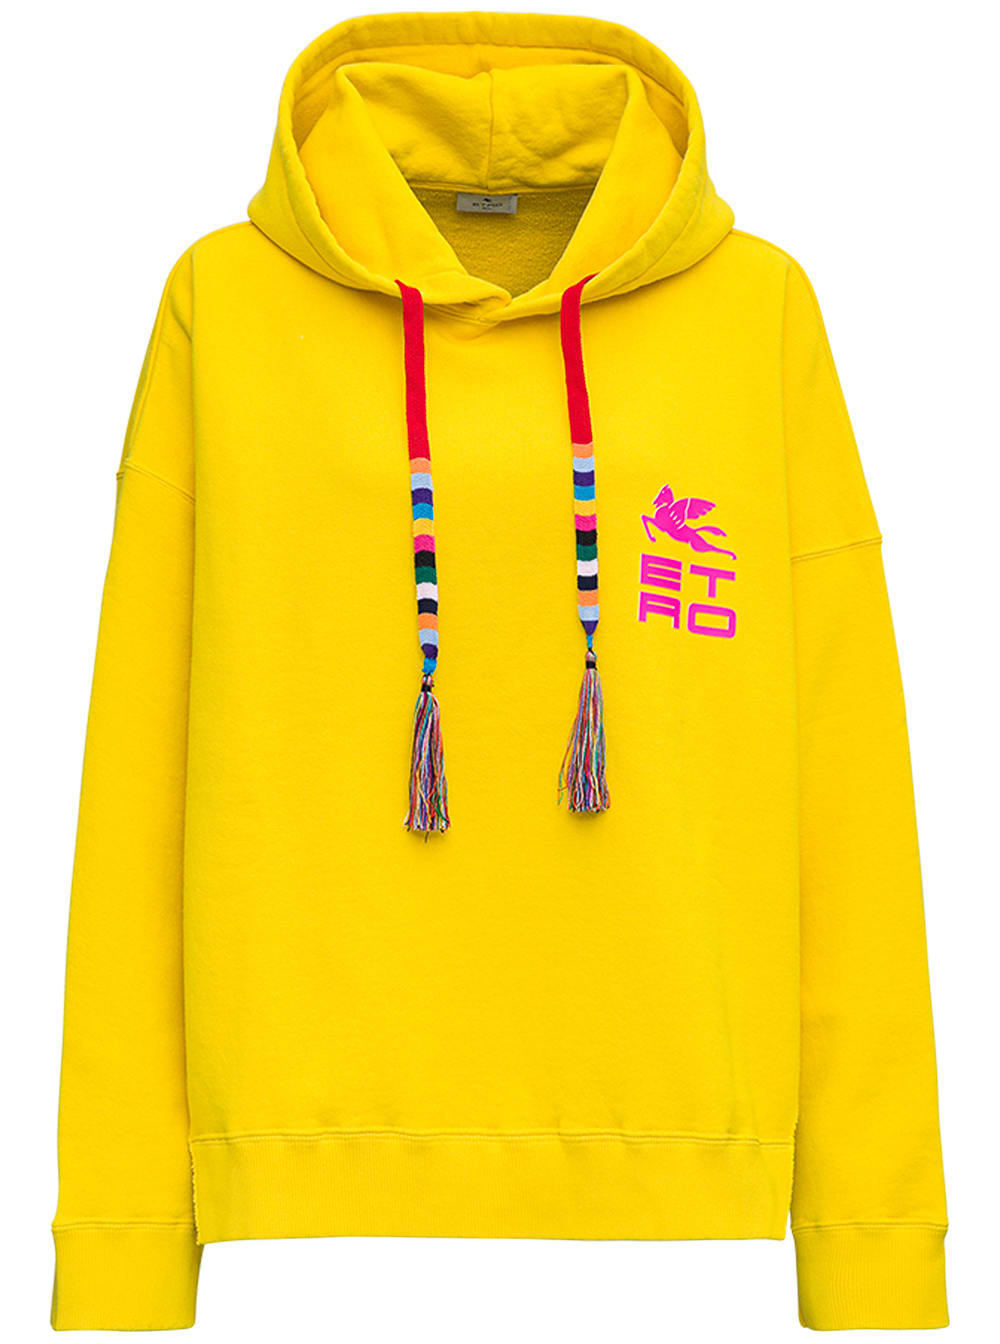 Etro Yellow Cotton Hoodie With Logo Print